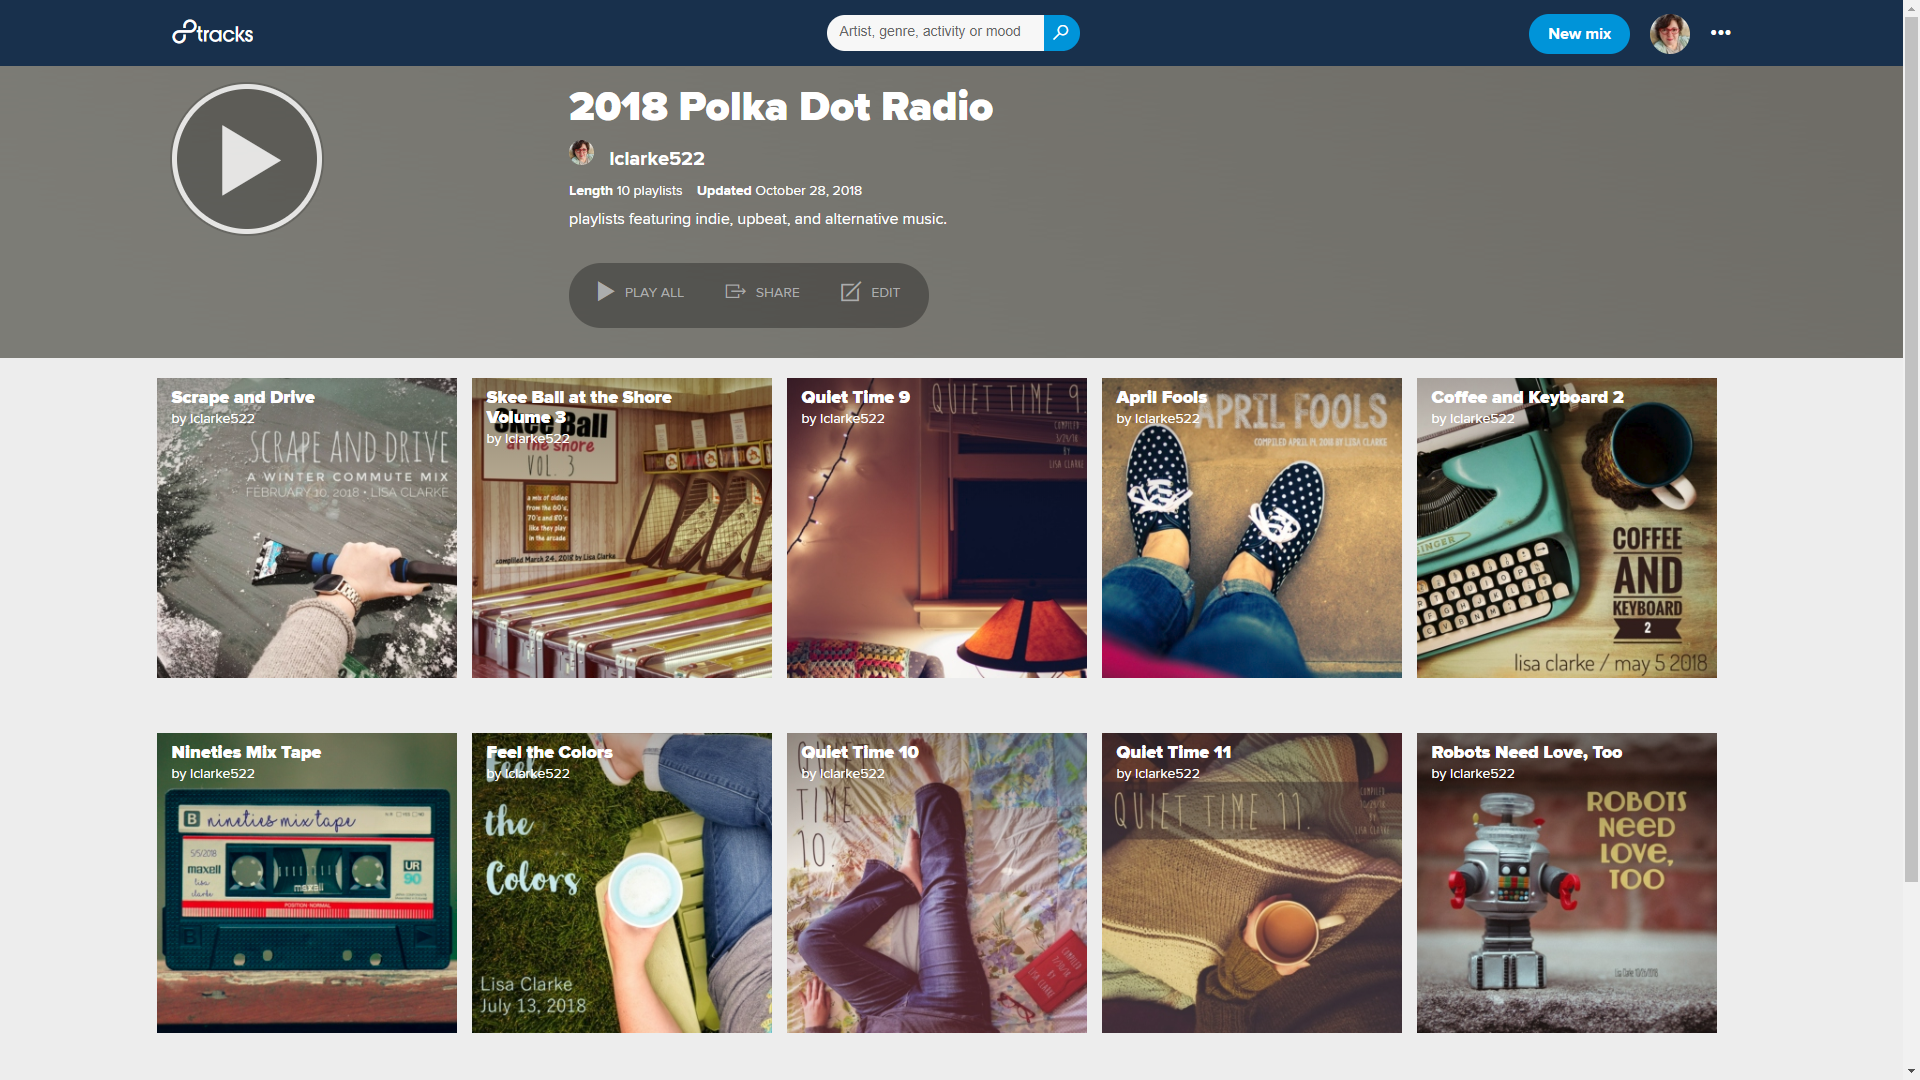 Ten Polka Dot Radio Playlists for 2018